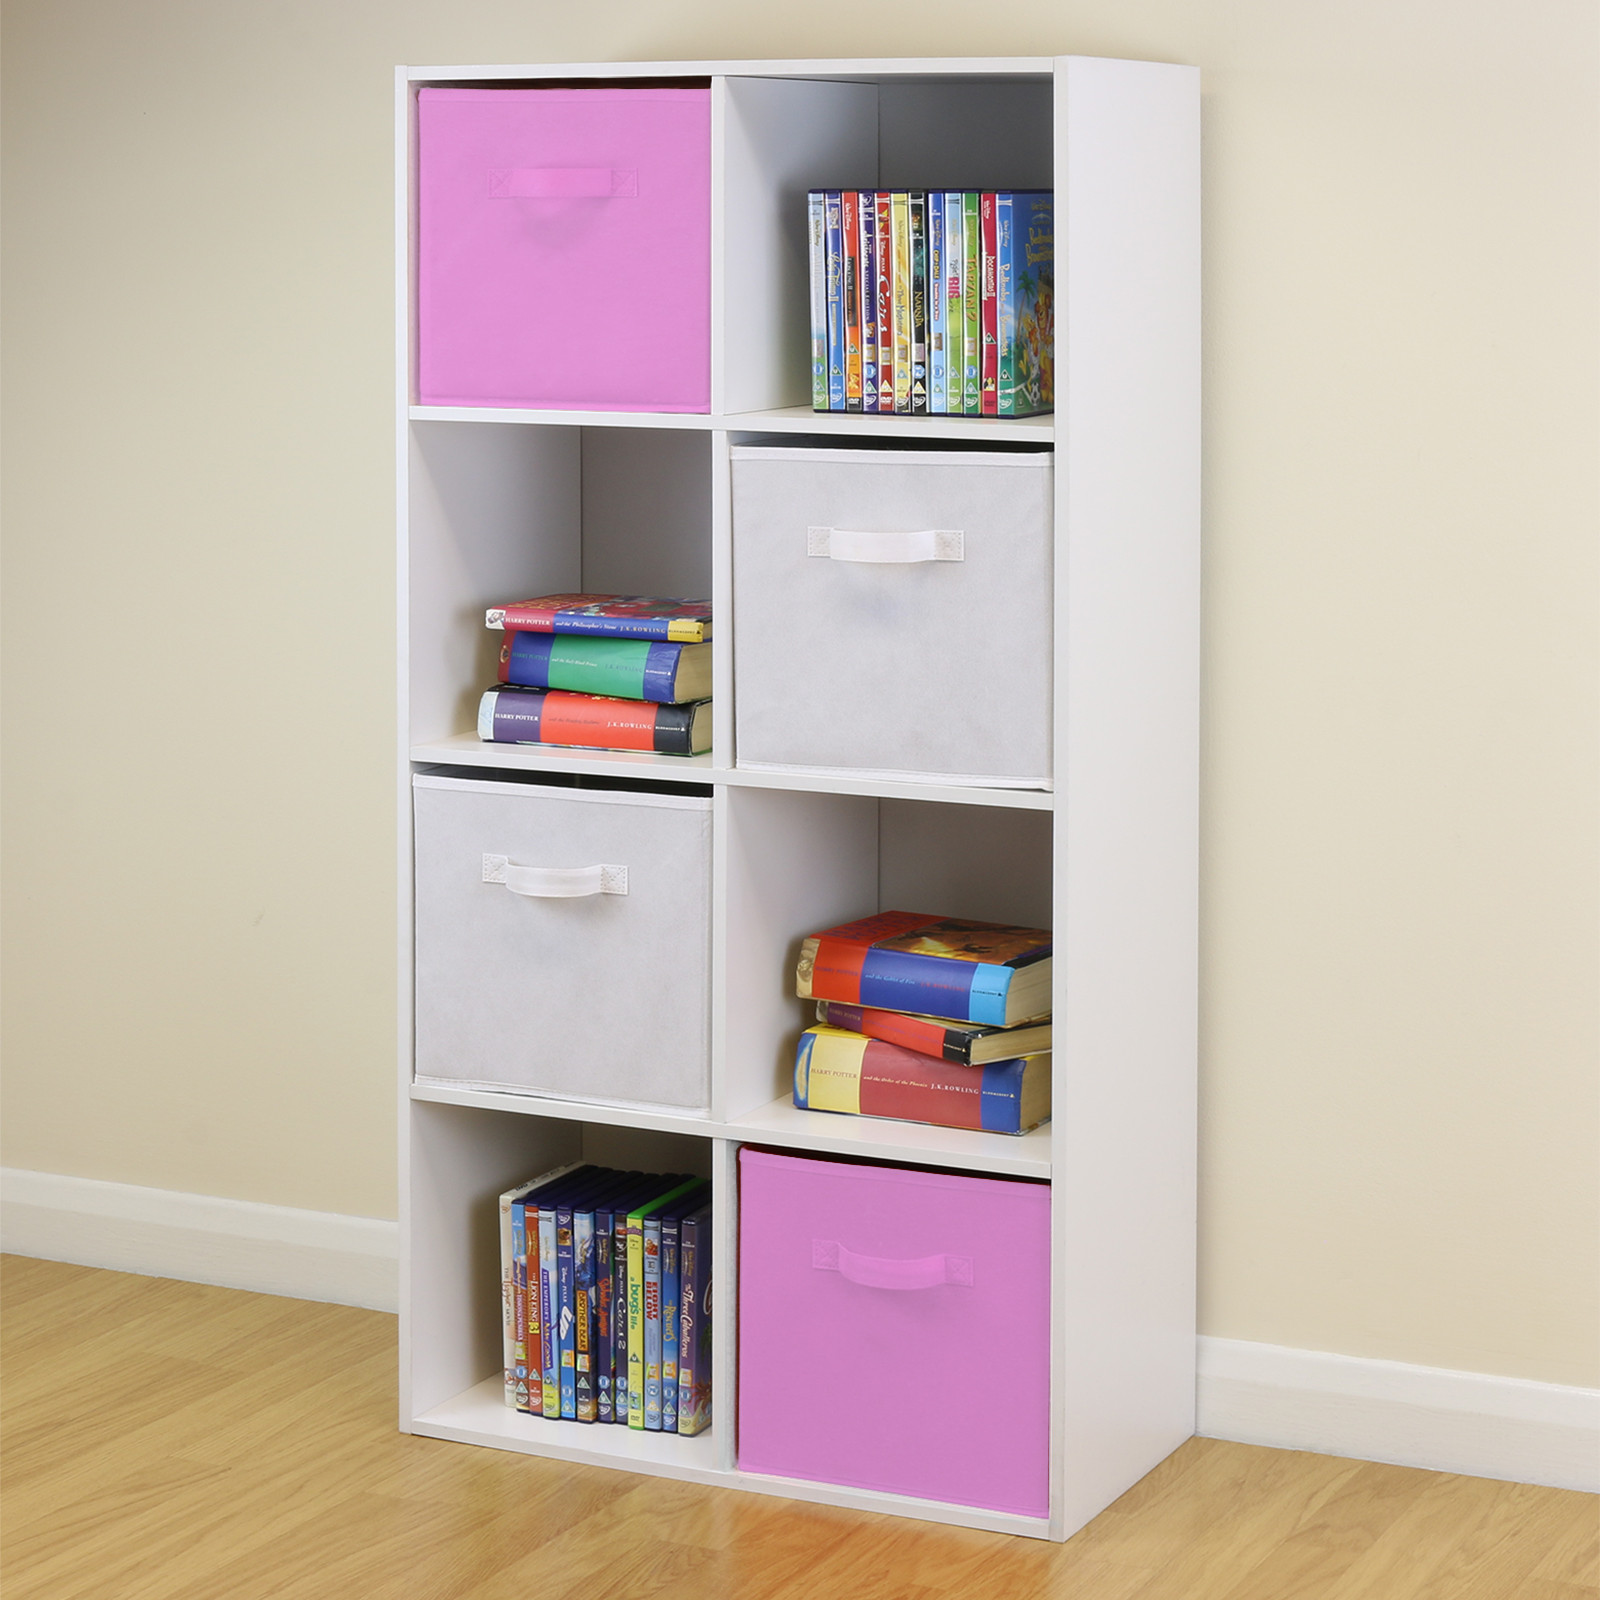 Storage Unit For Bedroom
 8 Cube Kids Pink & White Toy Games Storage Unit Girls Boys